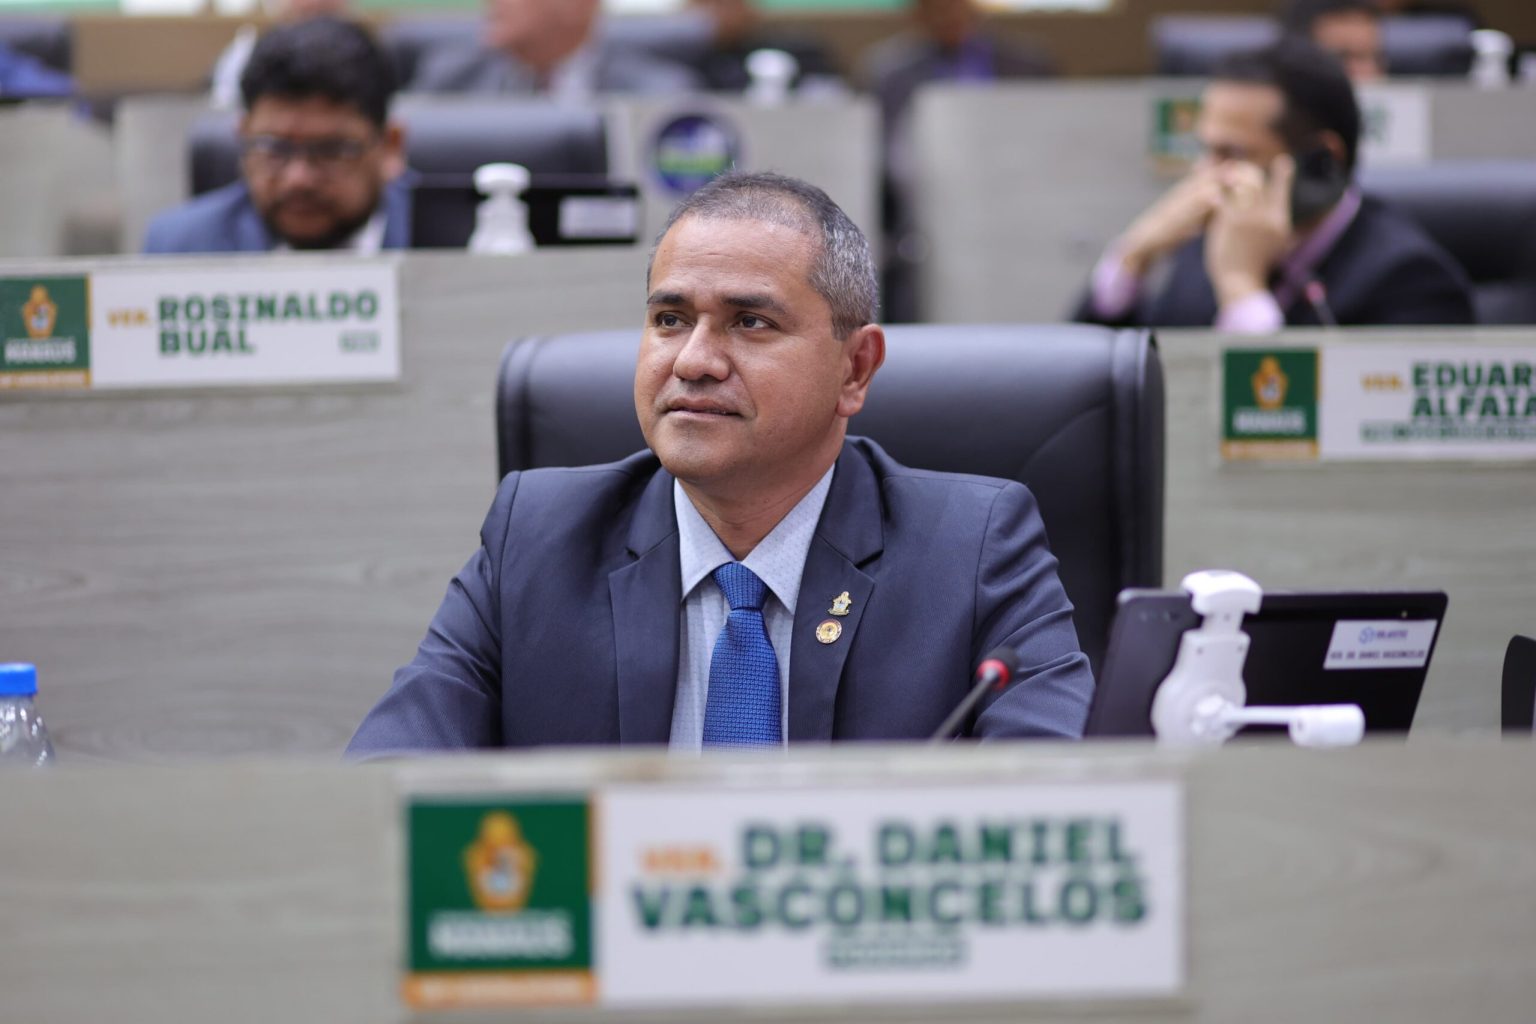 Dr. Daniel Vasconcelos scaled HhAlga